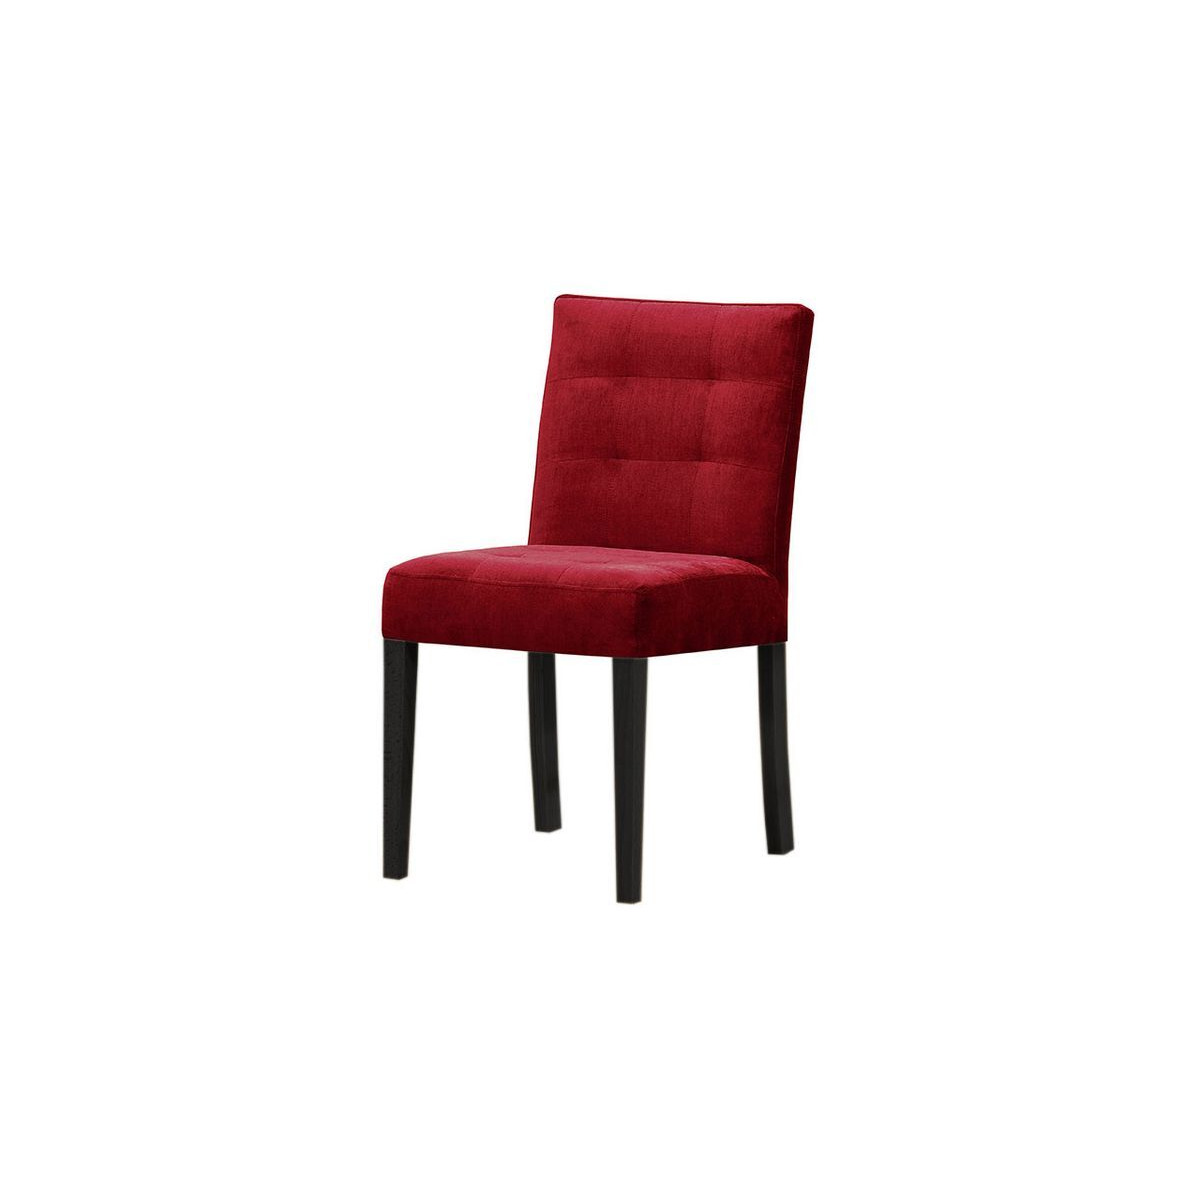 Mia Dining Chair, dark red, Leg colour: black - image 1